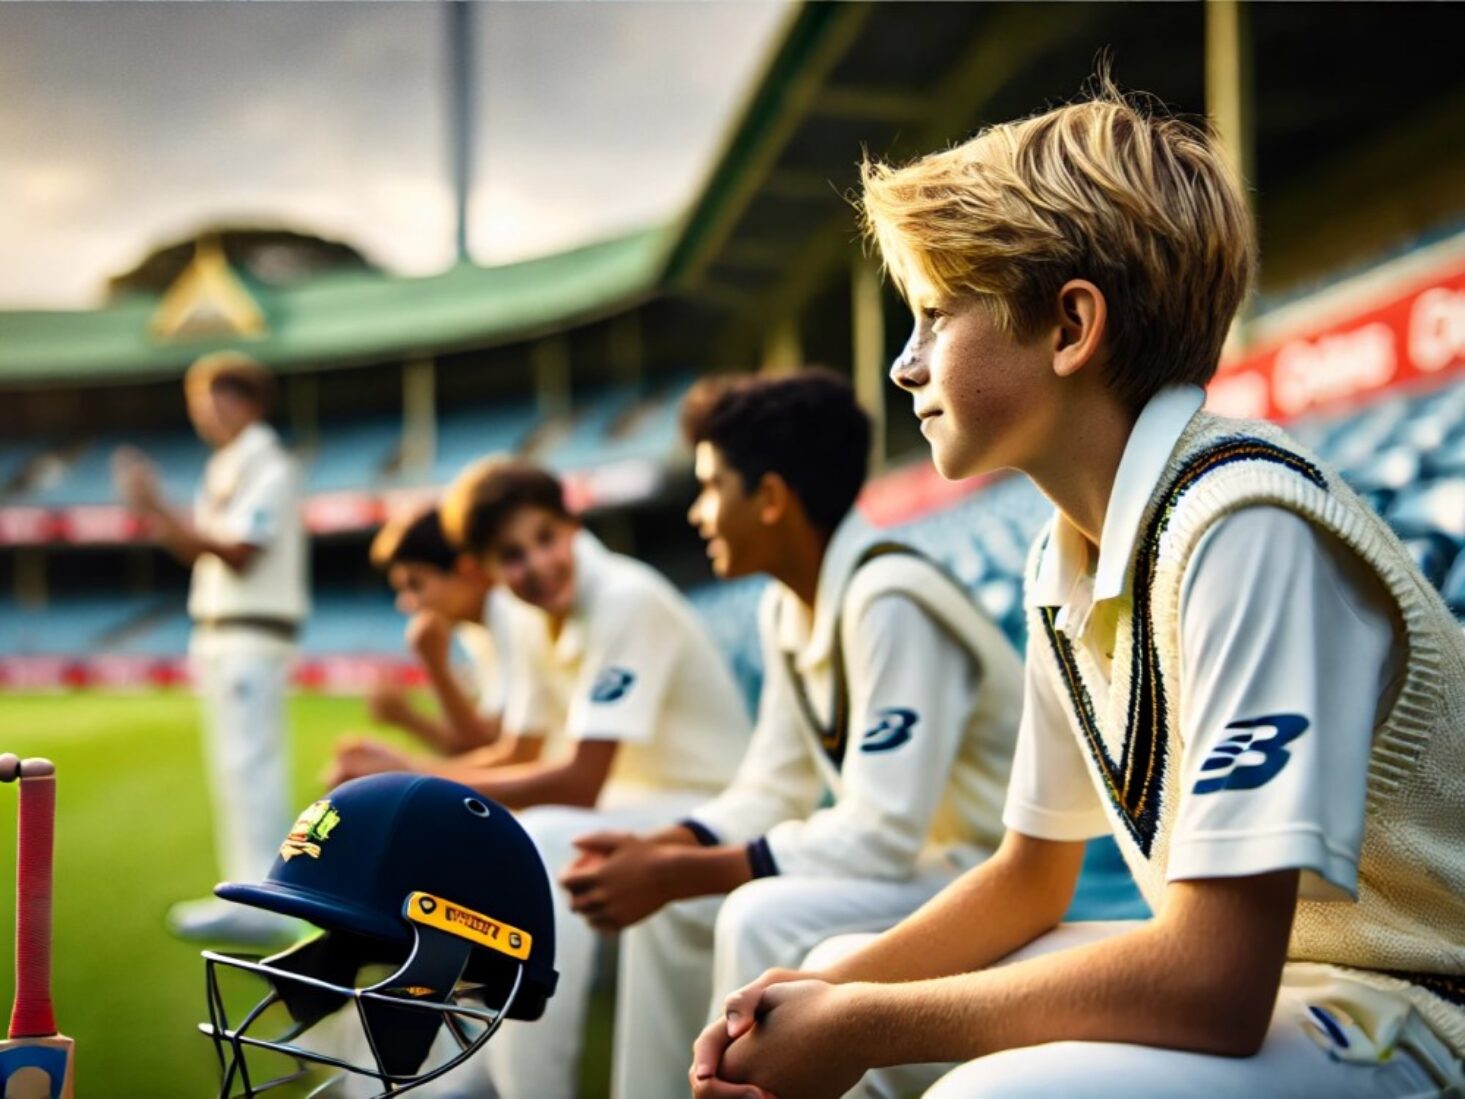 Cricket as A Team Sport for Children